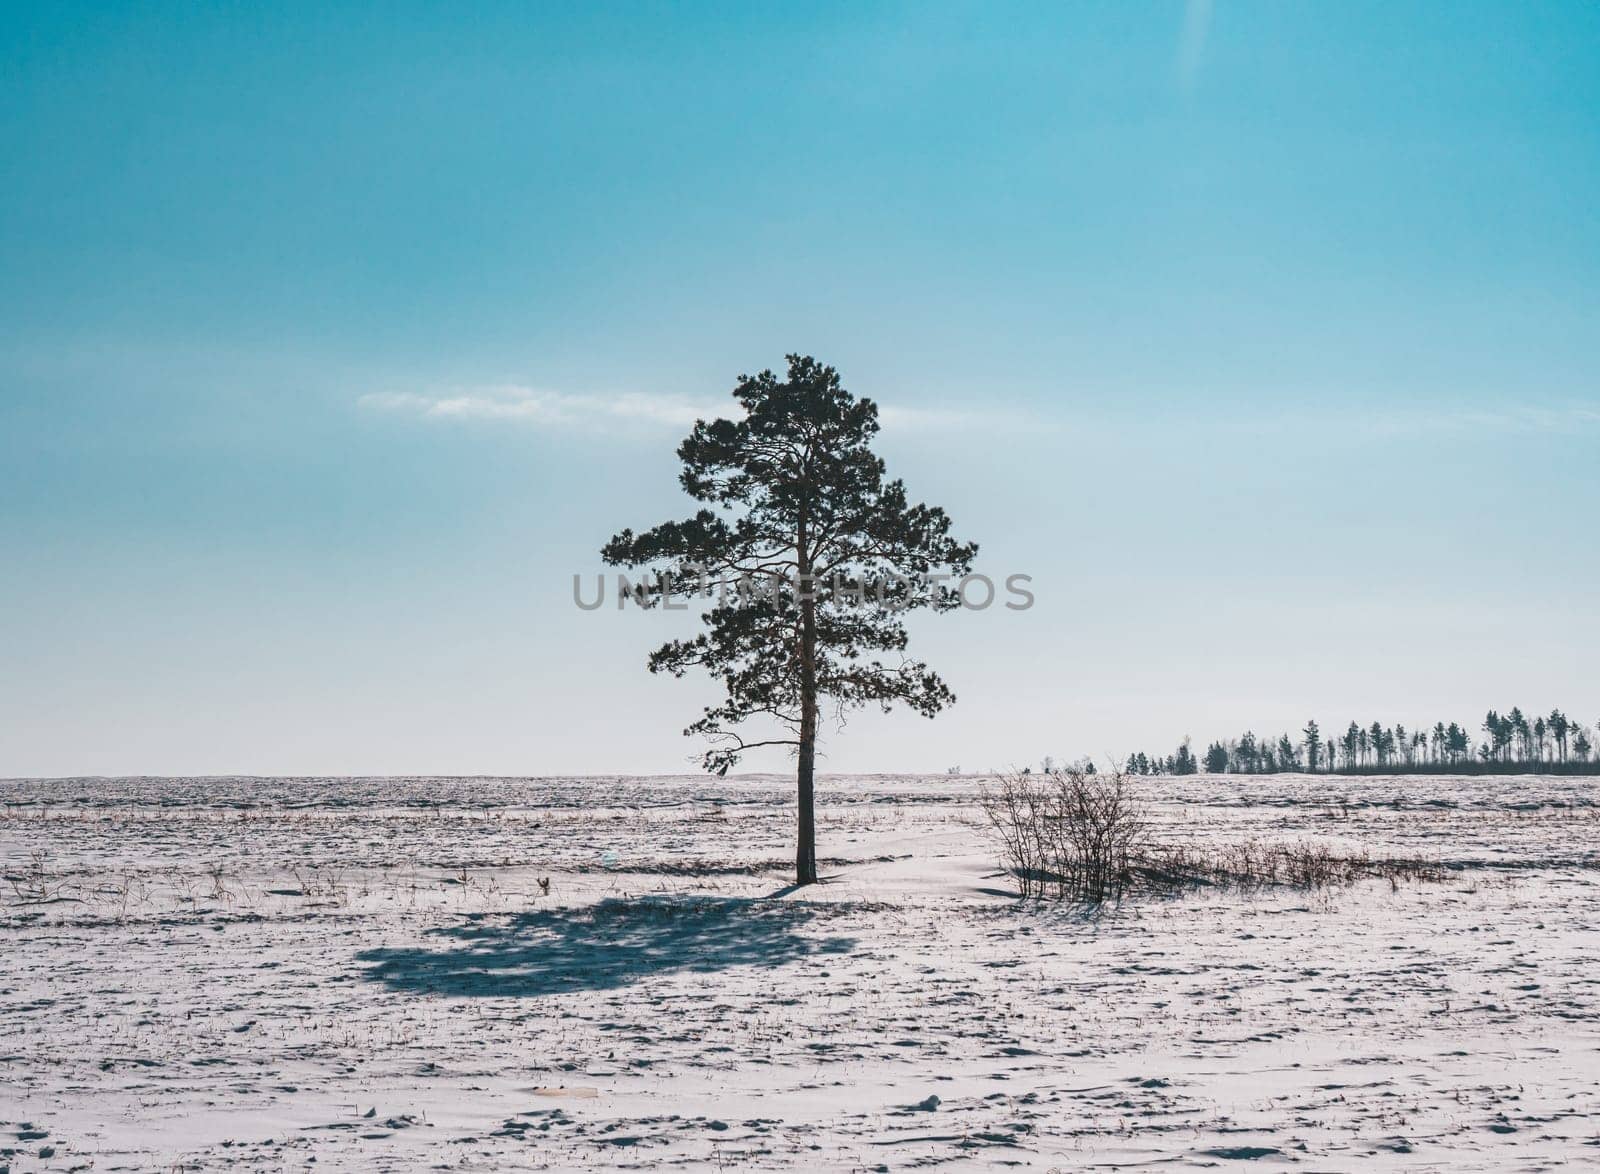 Solitary pine tree standing in snowy field under clear blue sky by Busker